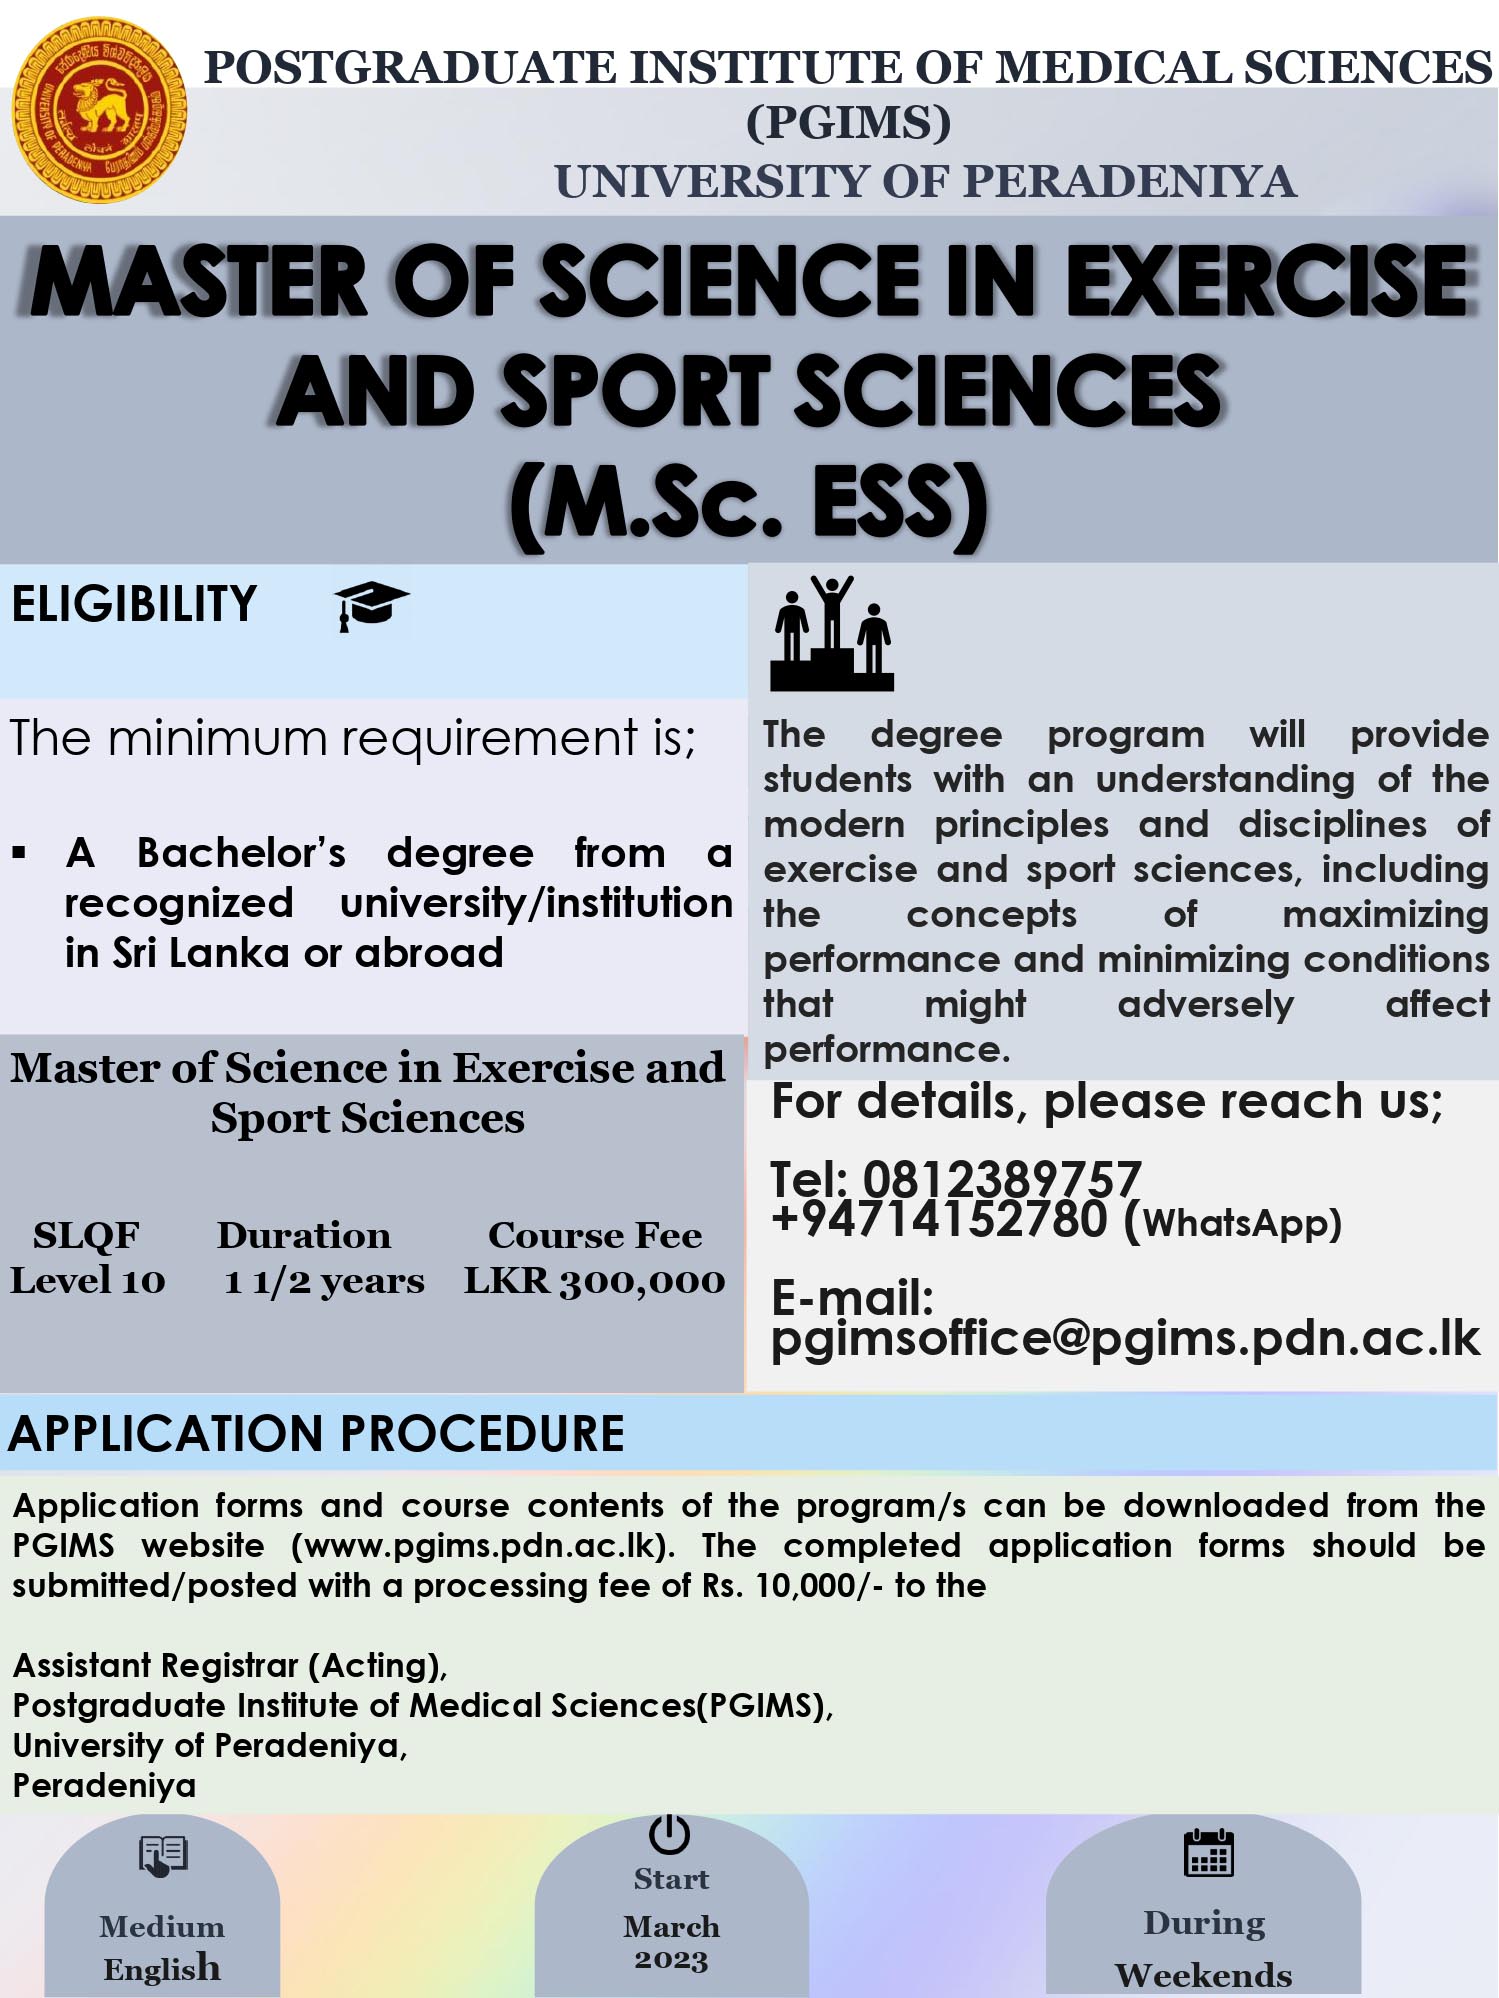 MSc in Exercise & Sports Sciences 2023 - PGIMS, University of Peradeniya